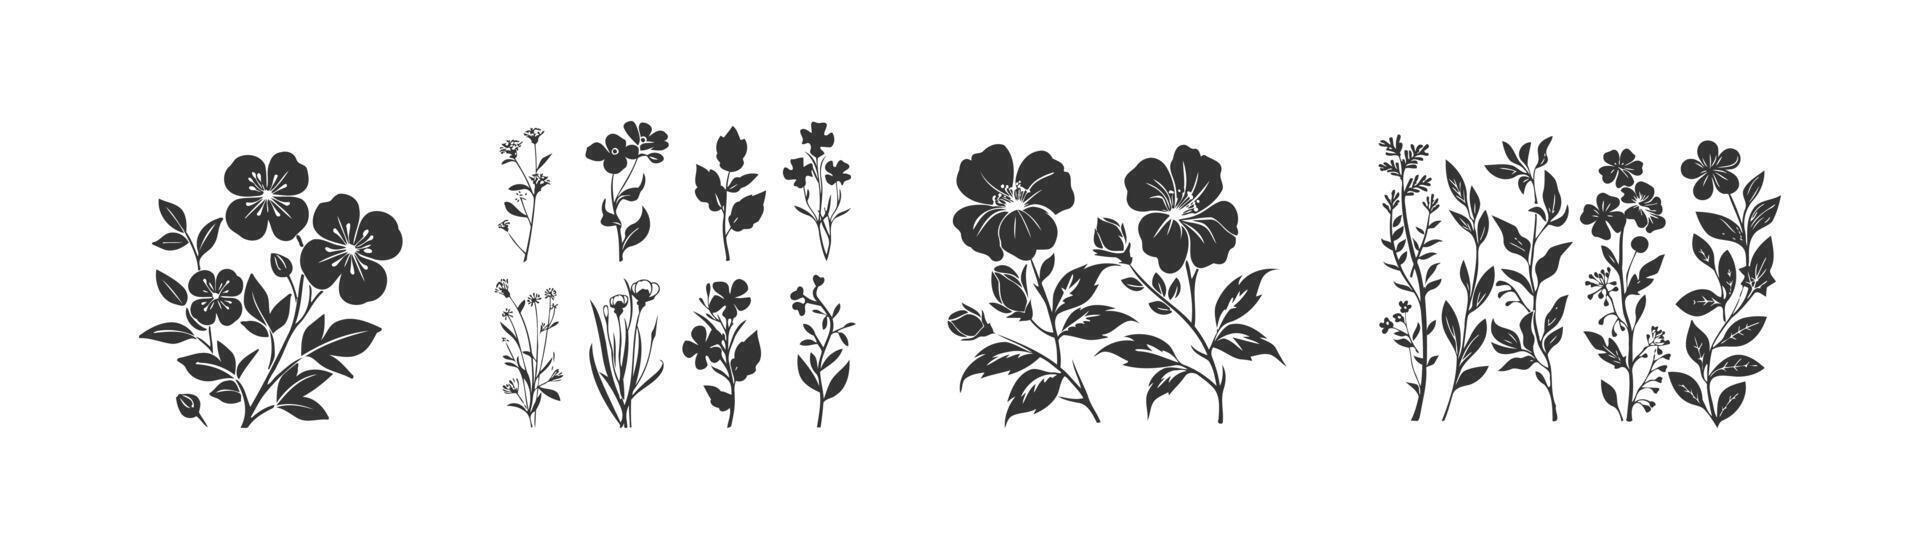 Flowers plants silhouette icon set. Vector illustration design.